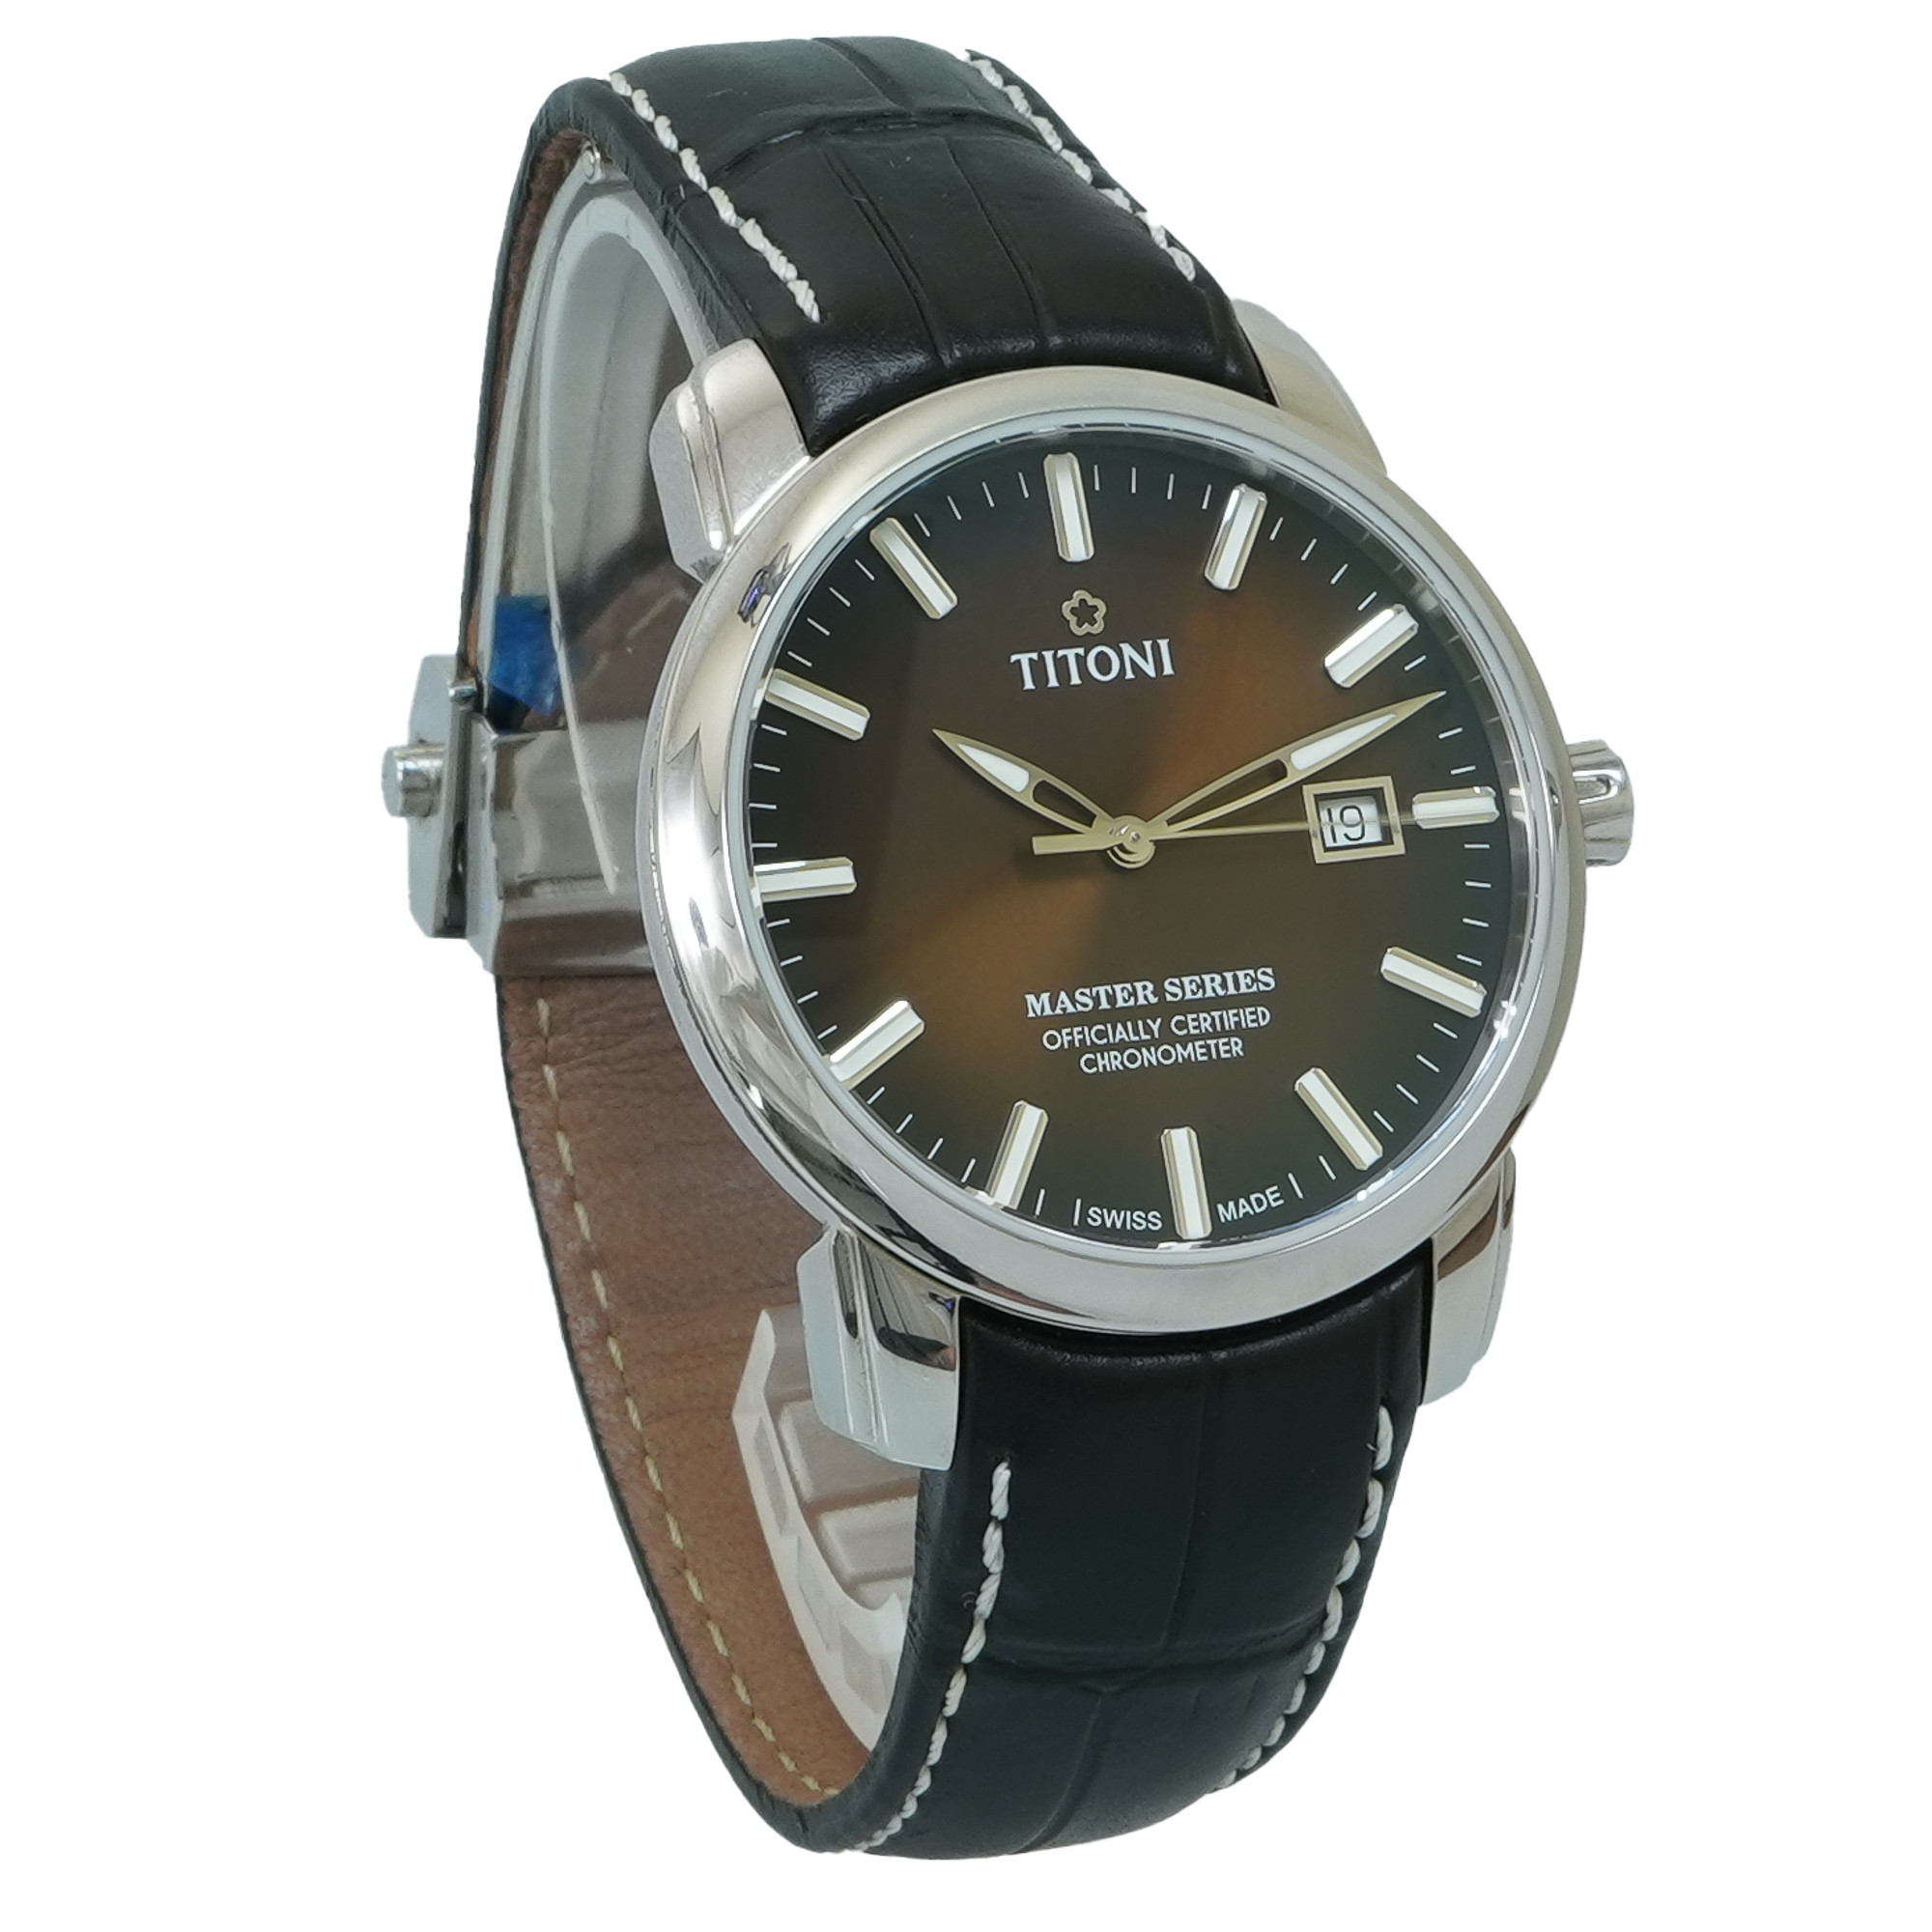 Titoni Master Series Chronometer - Inventory 4473